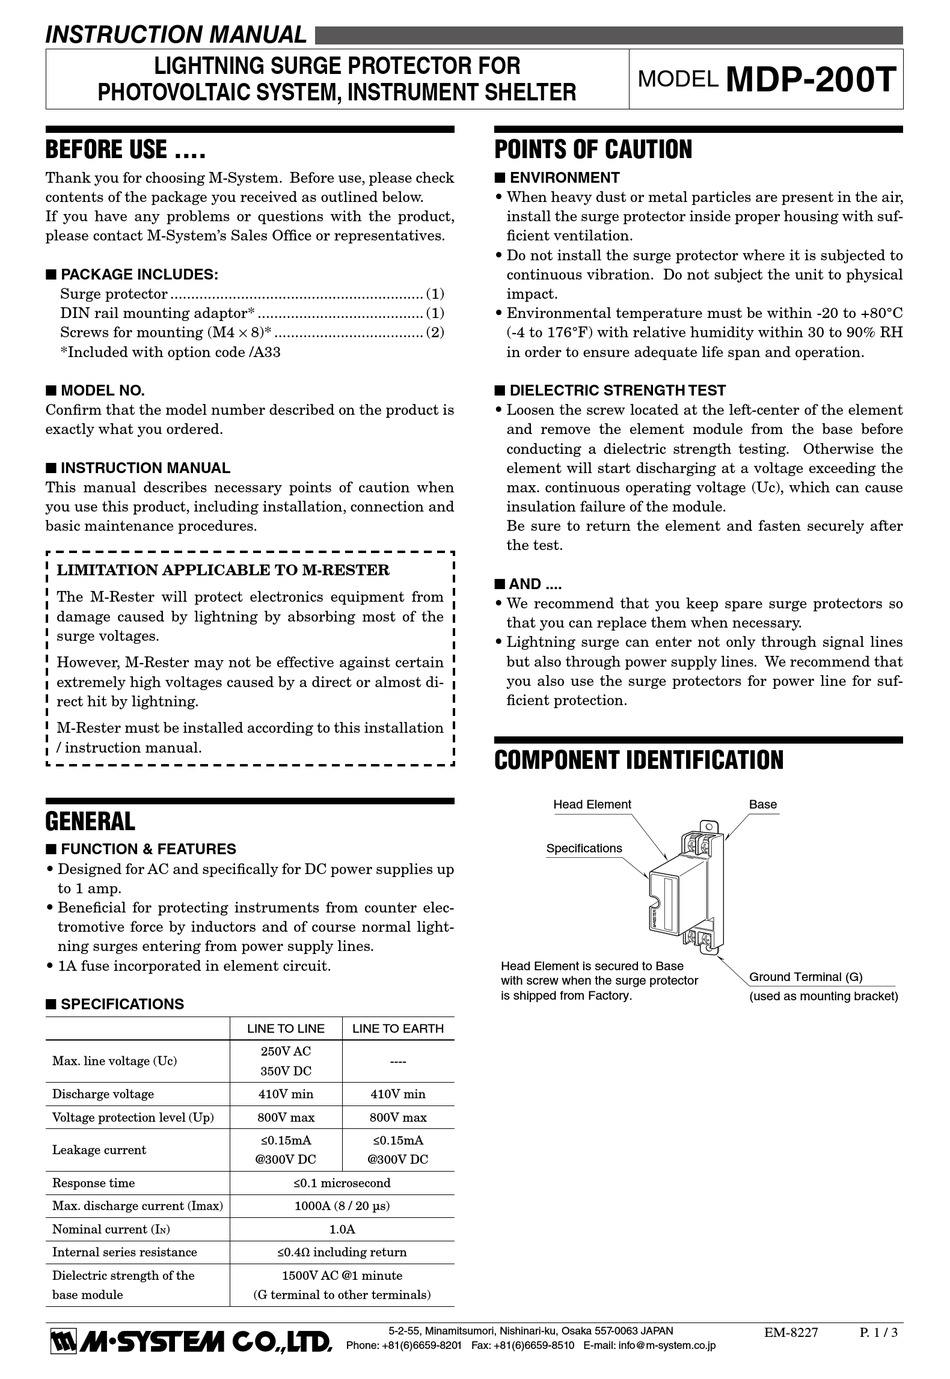 M-SYSTEM MDP-200T INSTRUCTION MANUAL Pdf Download | ManualsLib